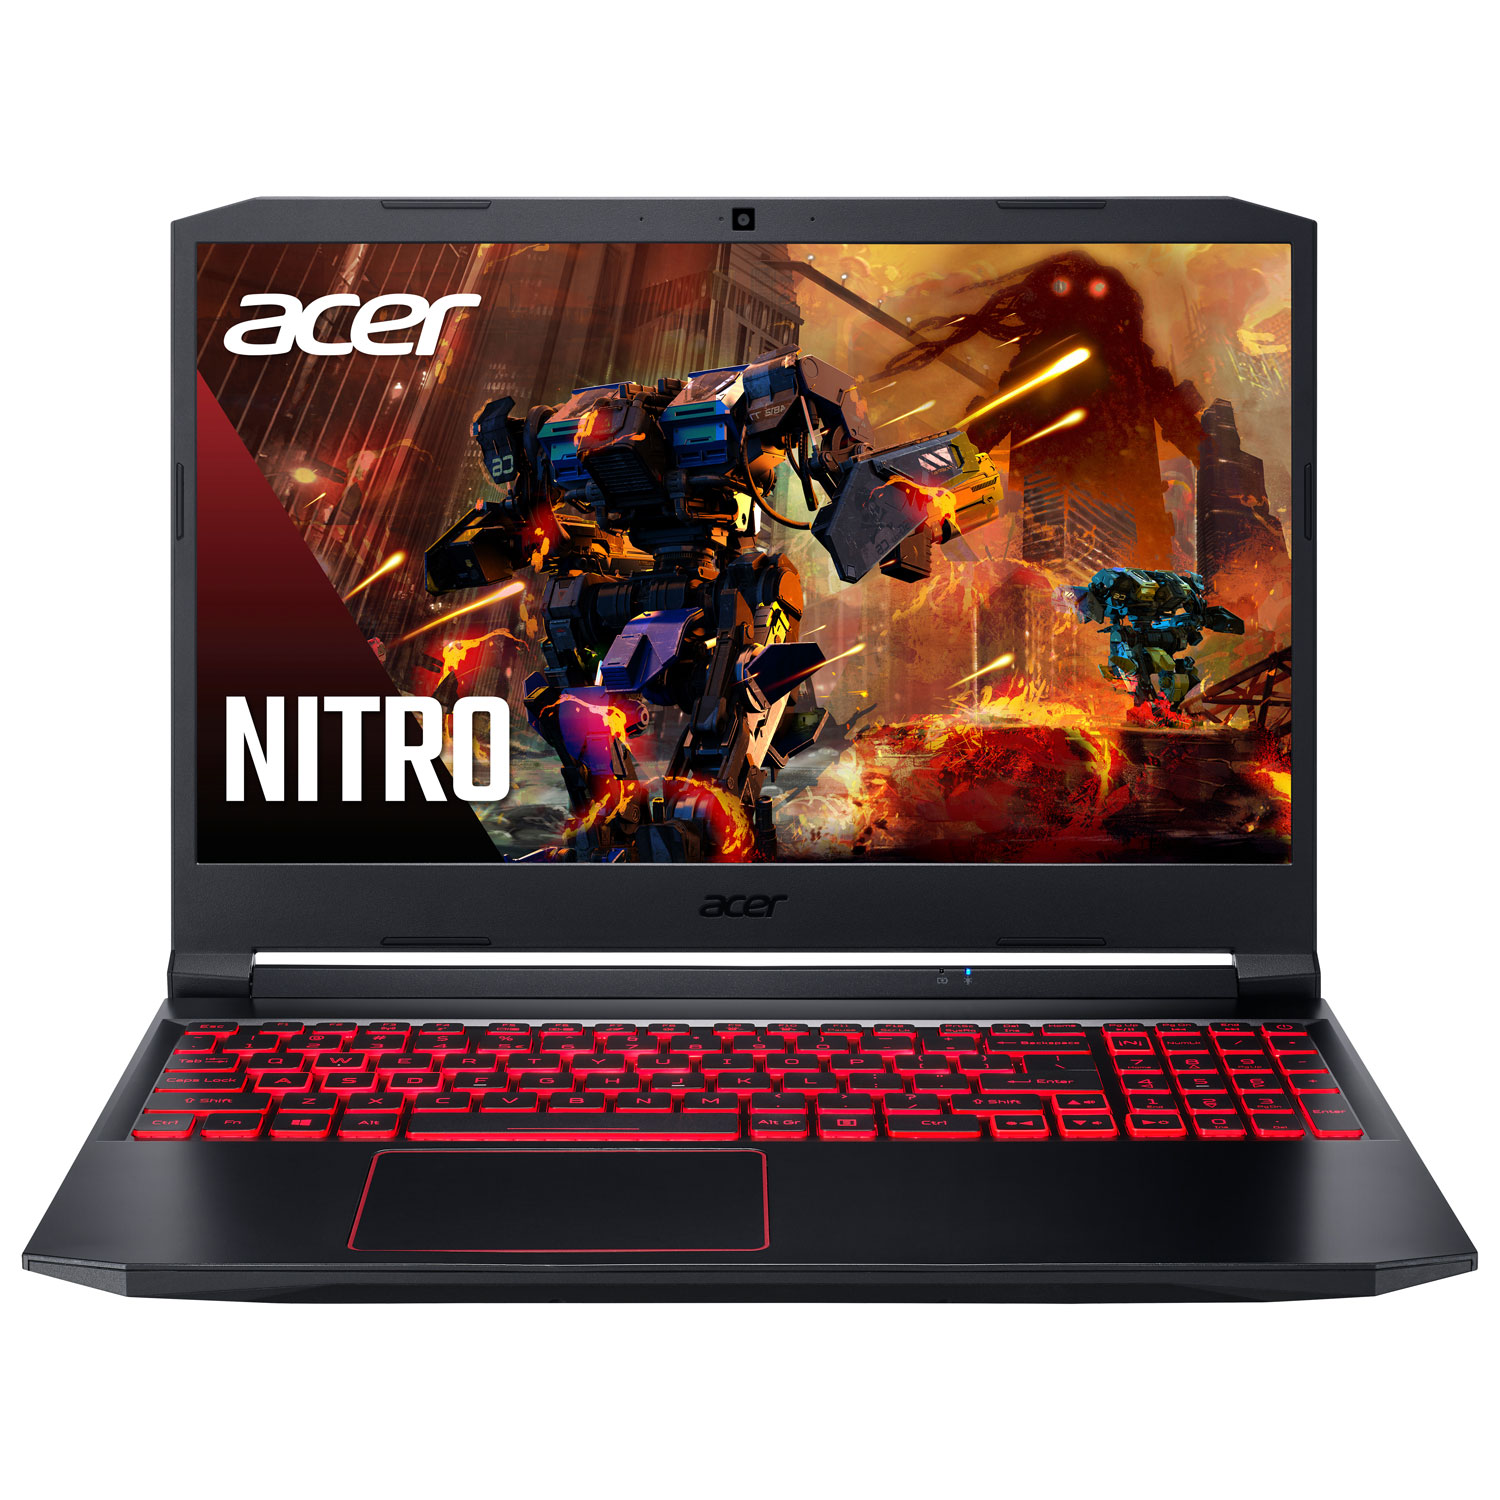 Acer Nitro 5 15.6" Laptop - Black (Intel Ci5-10300H/512GB SSD/8GB RAM/GeForce GTX 1650/Windows 11)